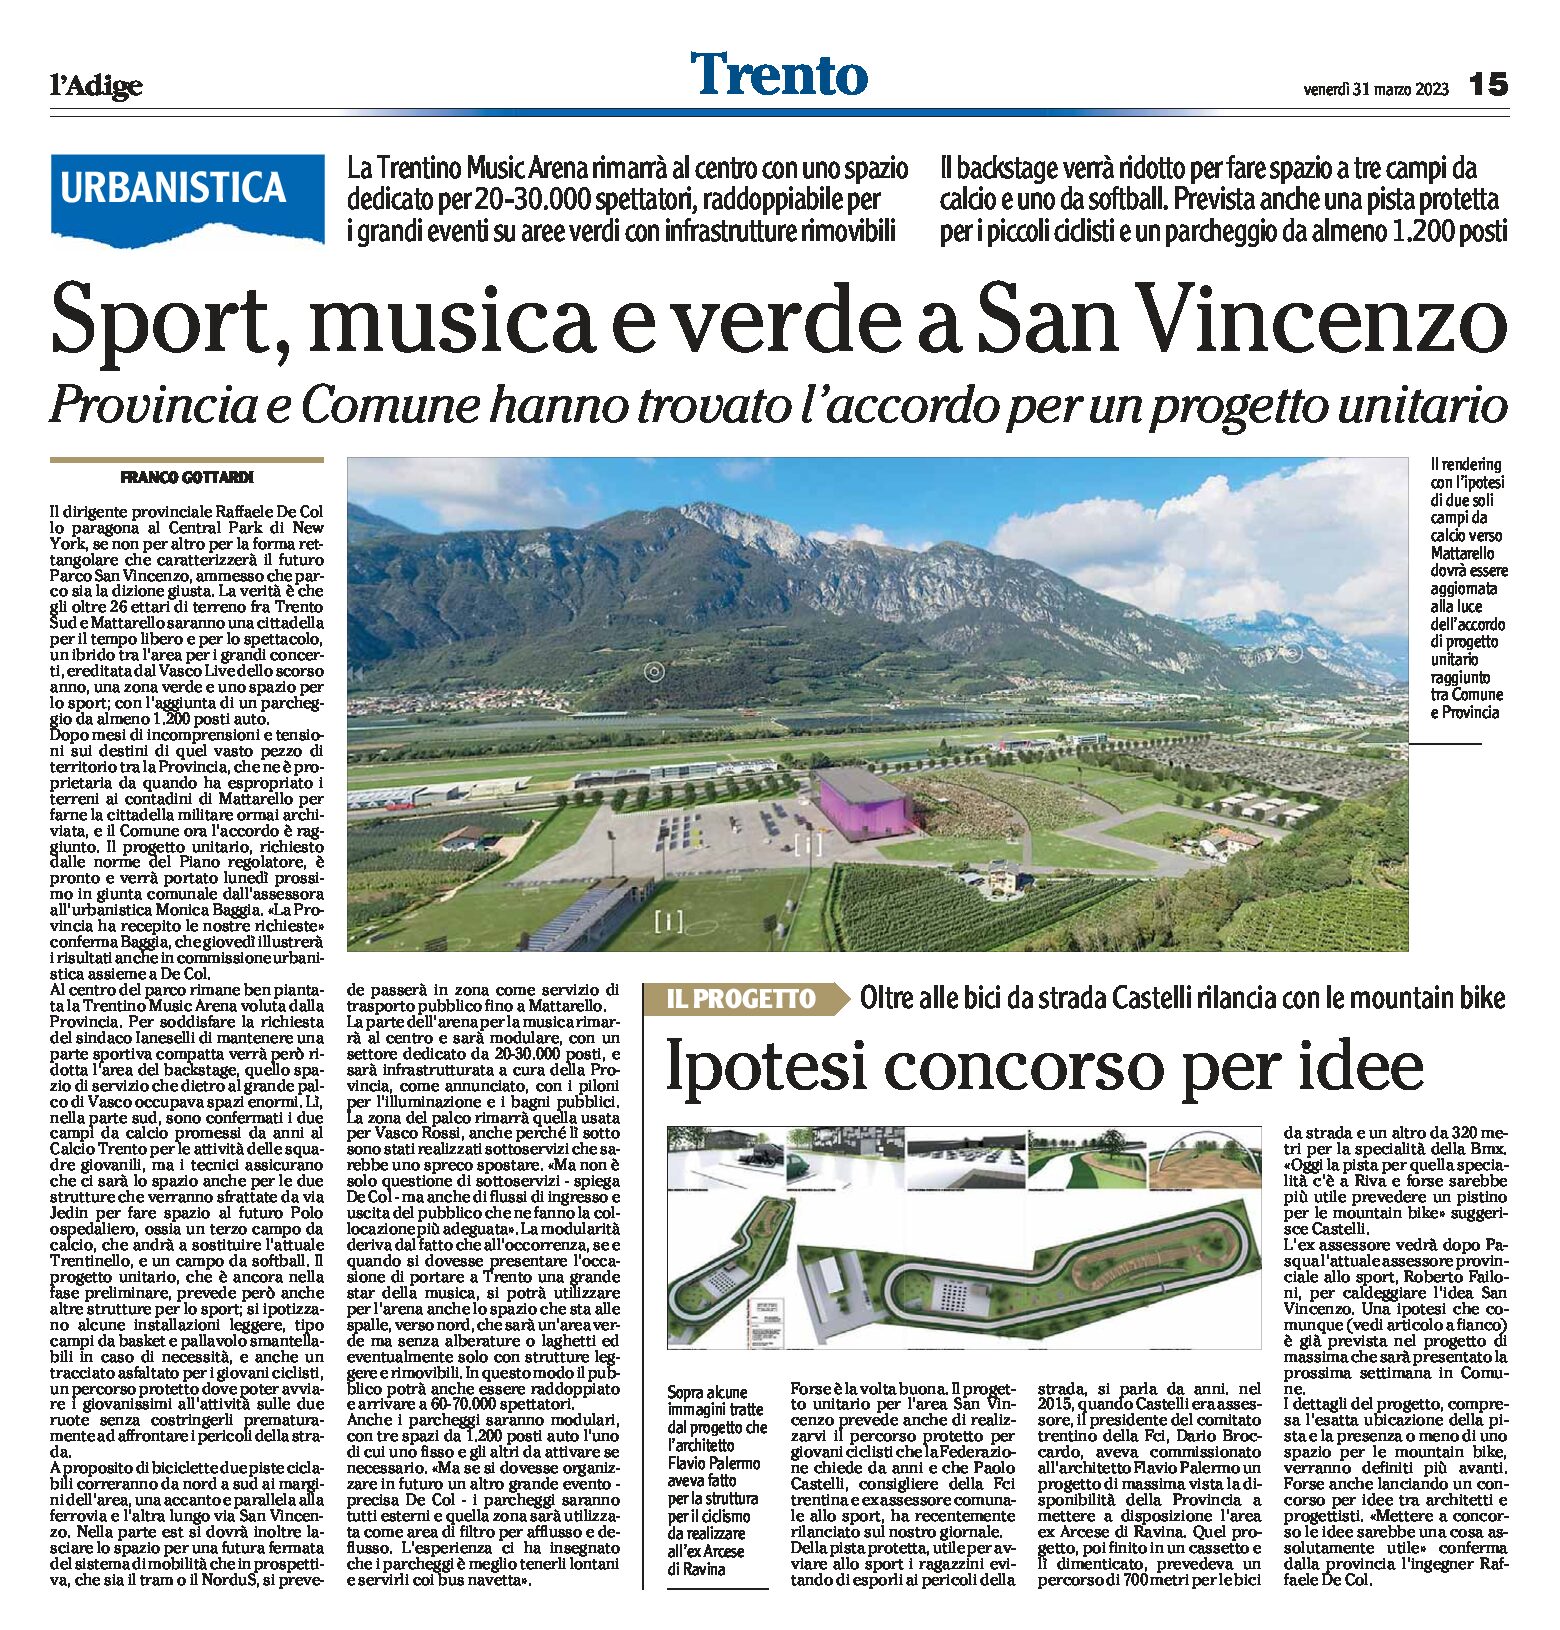 Trentino Music Arena: sport, musica e verde a San Vincenzo